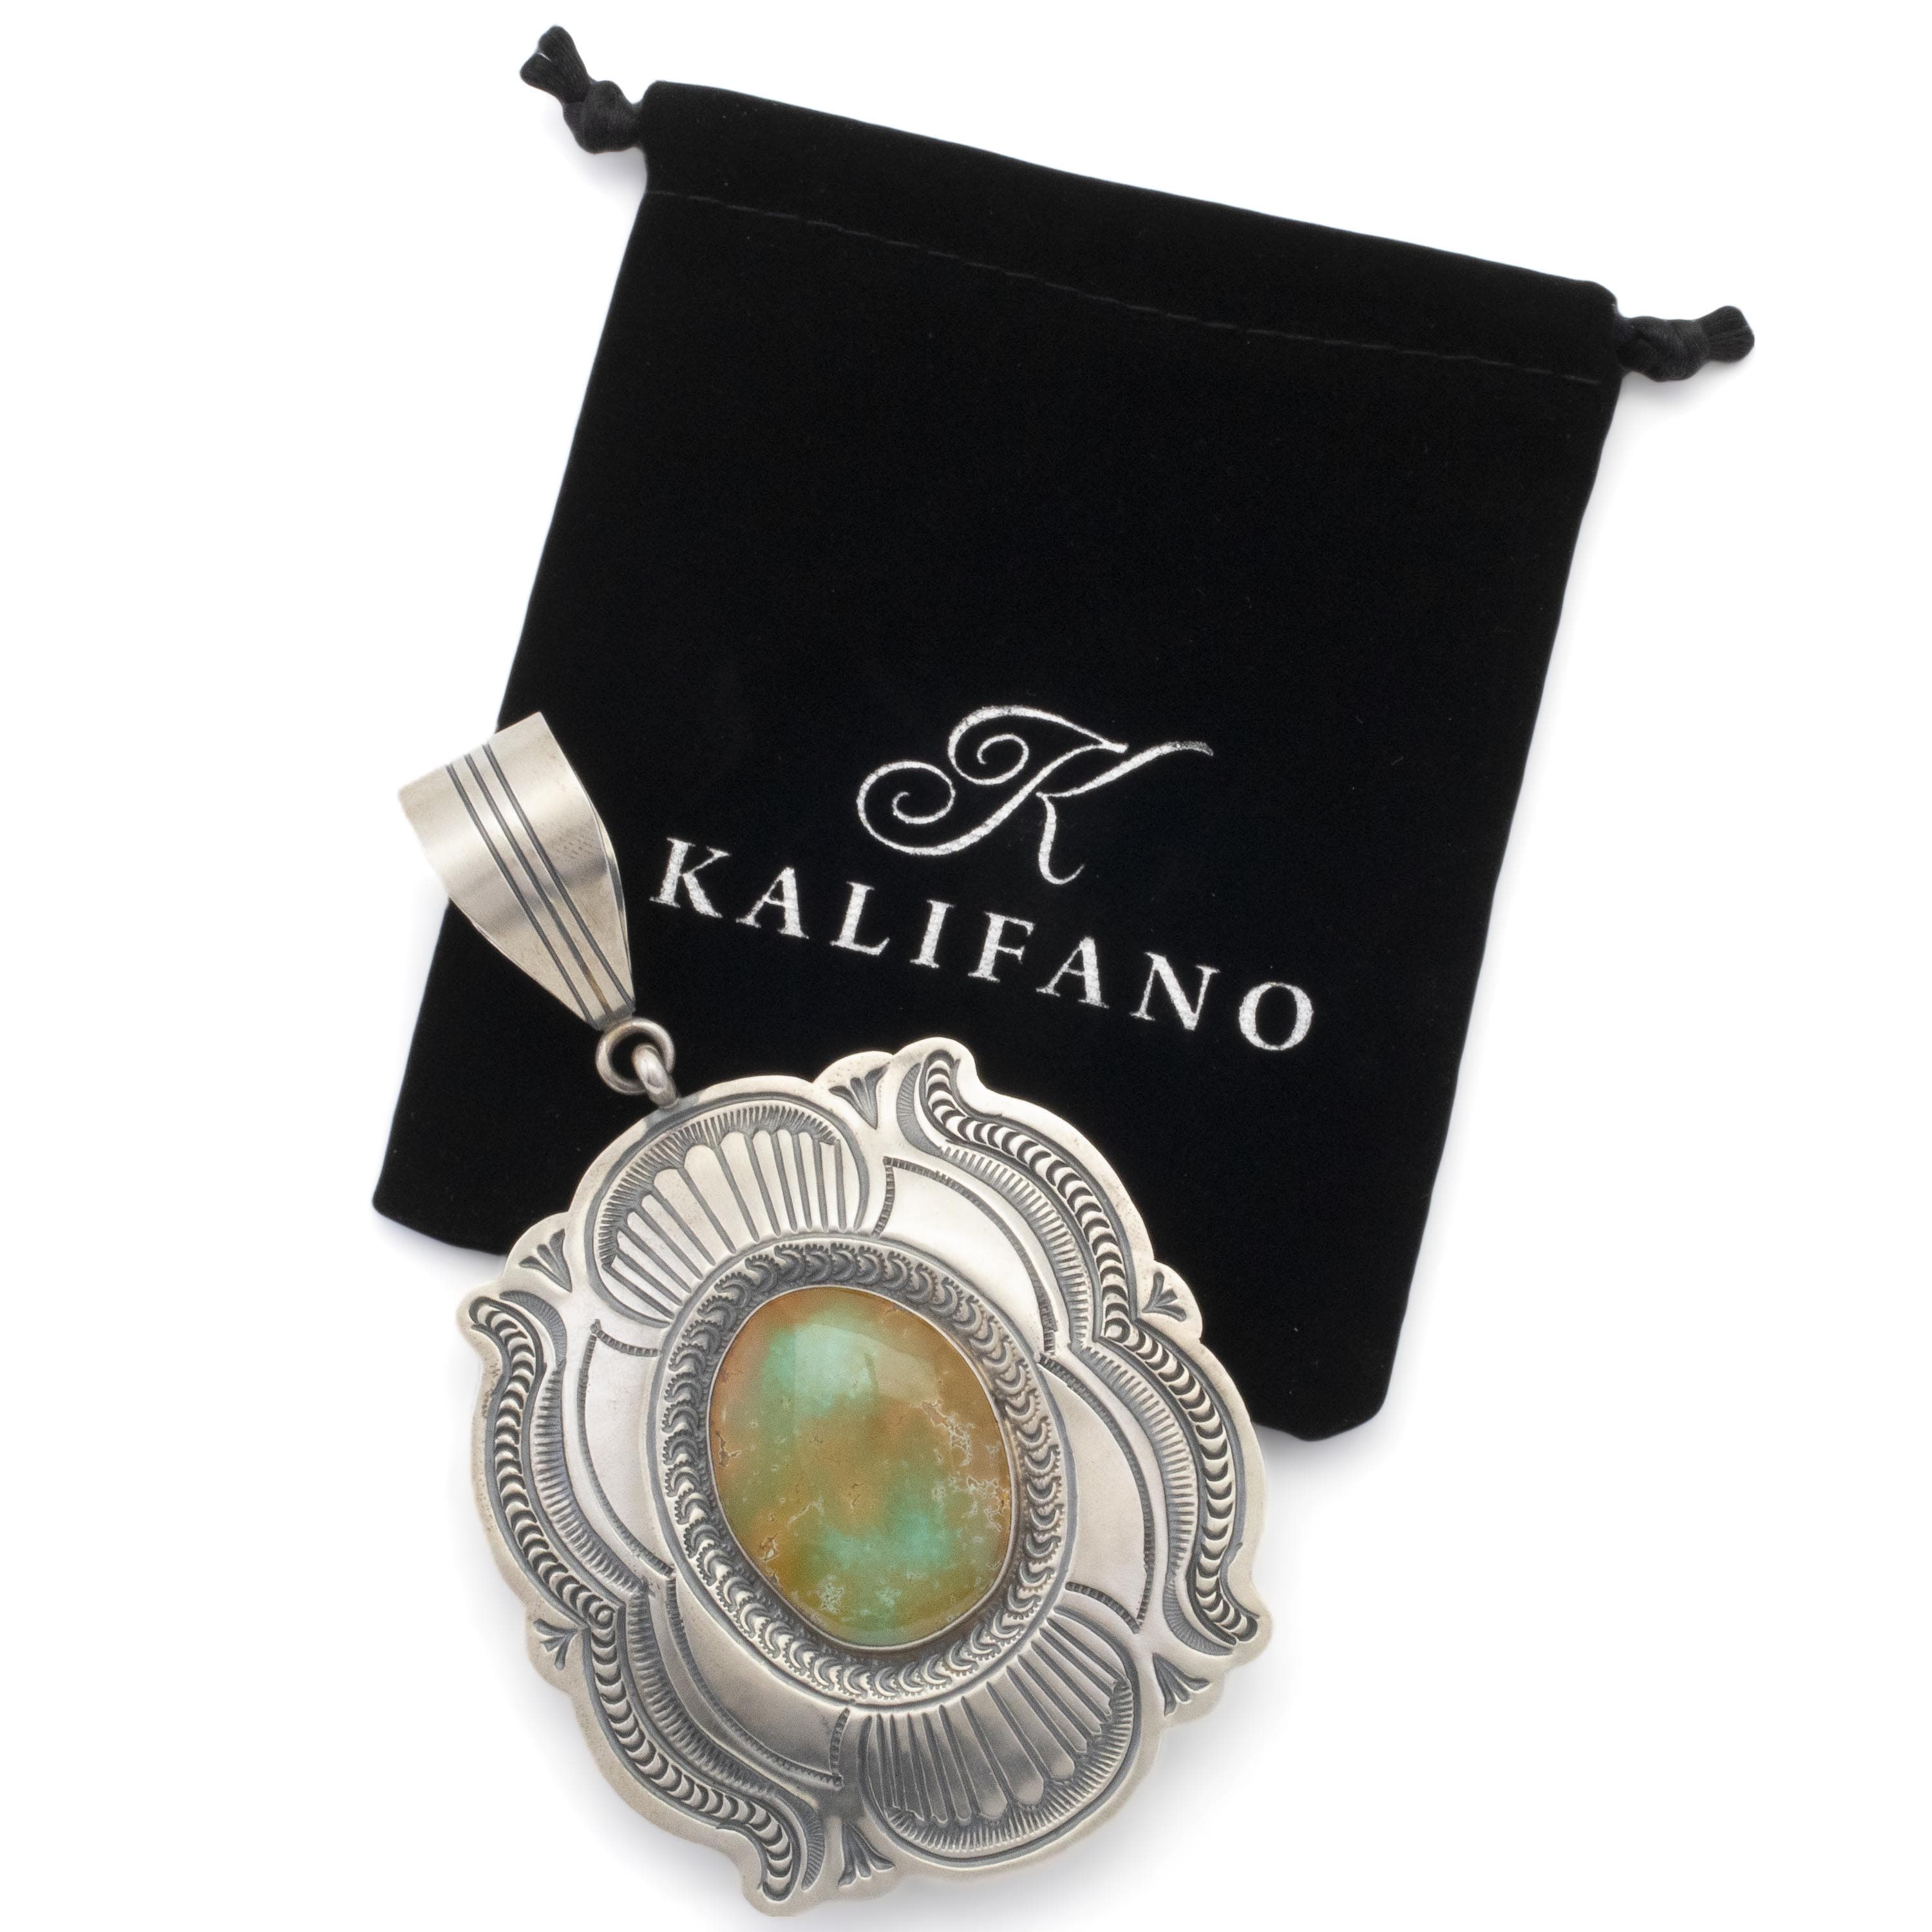 Kalifano Native American Jewelry Arnold Blackgoat Navajo Carico Lake Turquoise USA Native American Made 925 Sterling Silver Pendant NAN1900.005